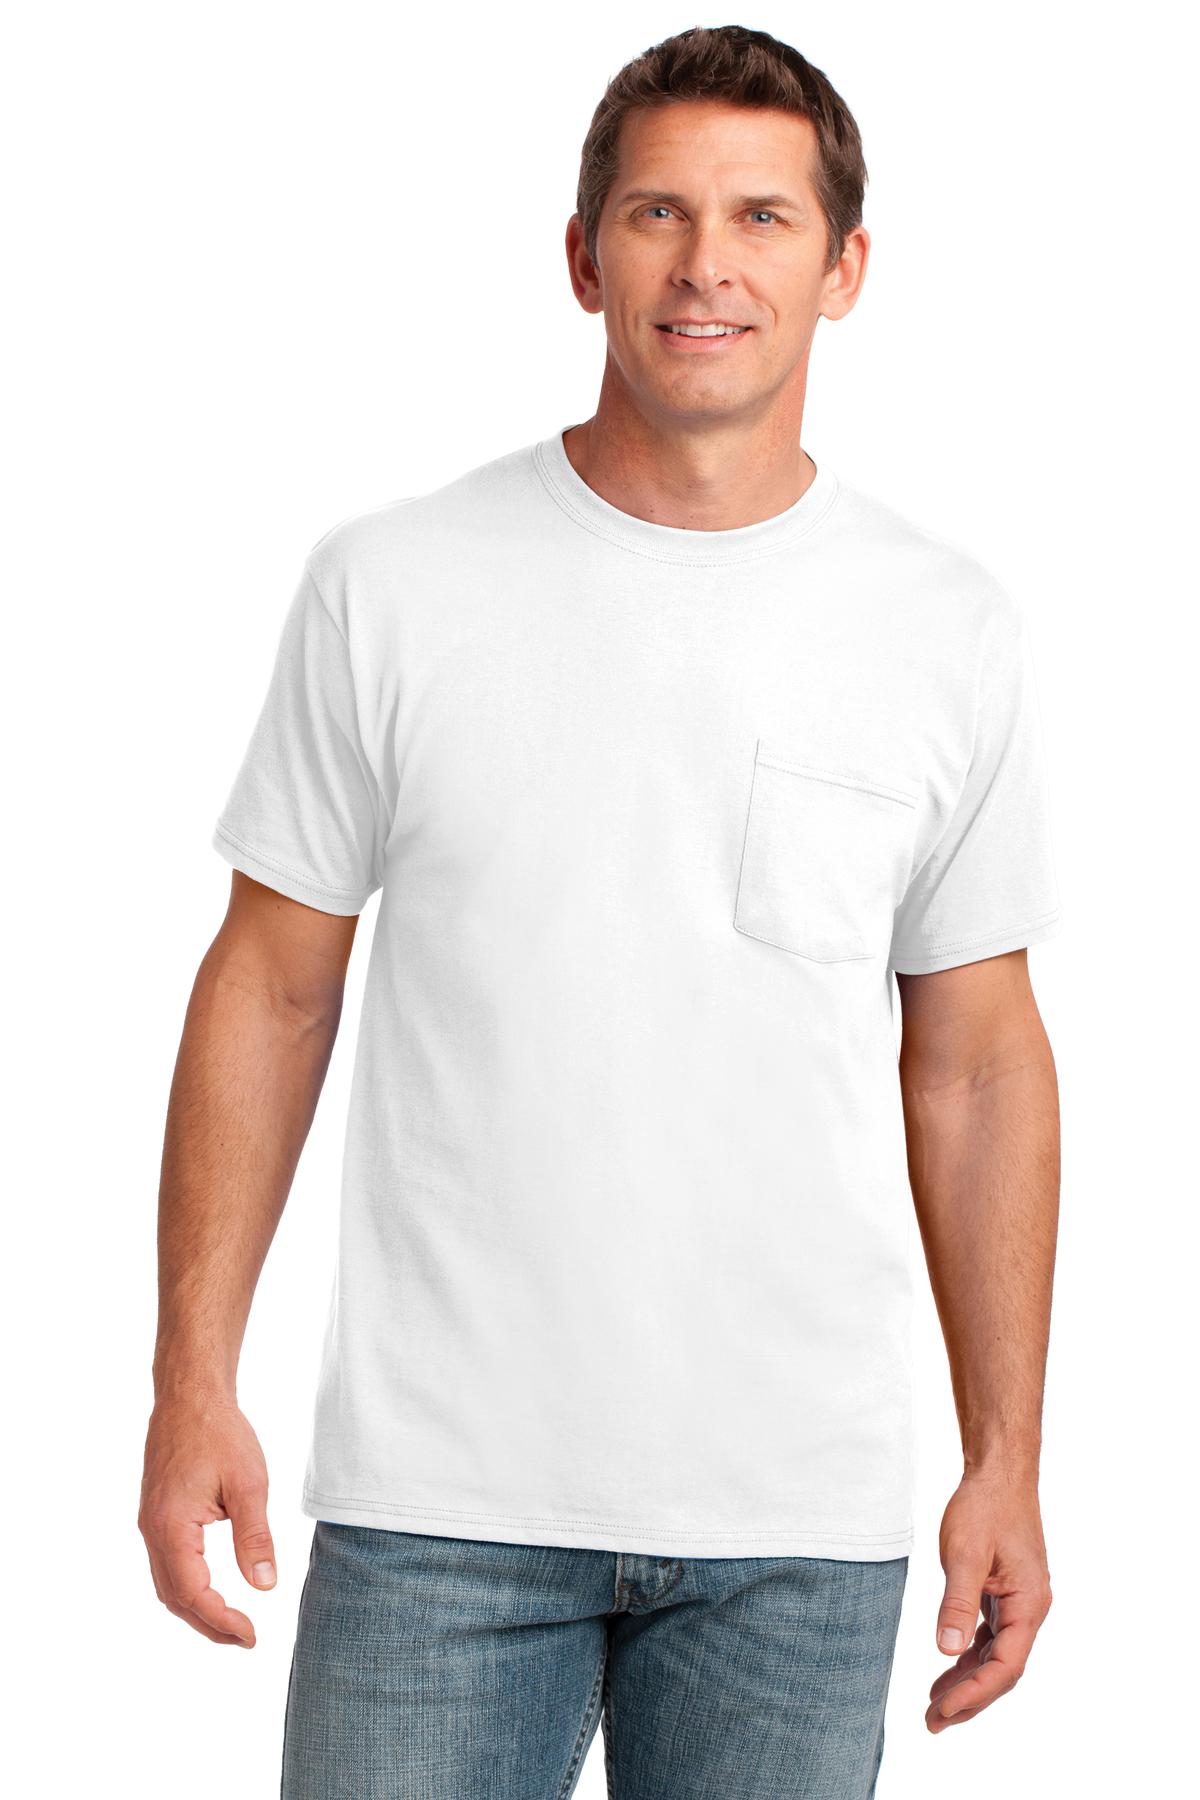 Port & Company Hospitality T-Shirts ® Core Cotton Pocket Tee.-Port & Company